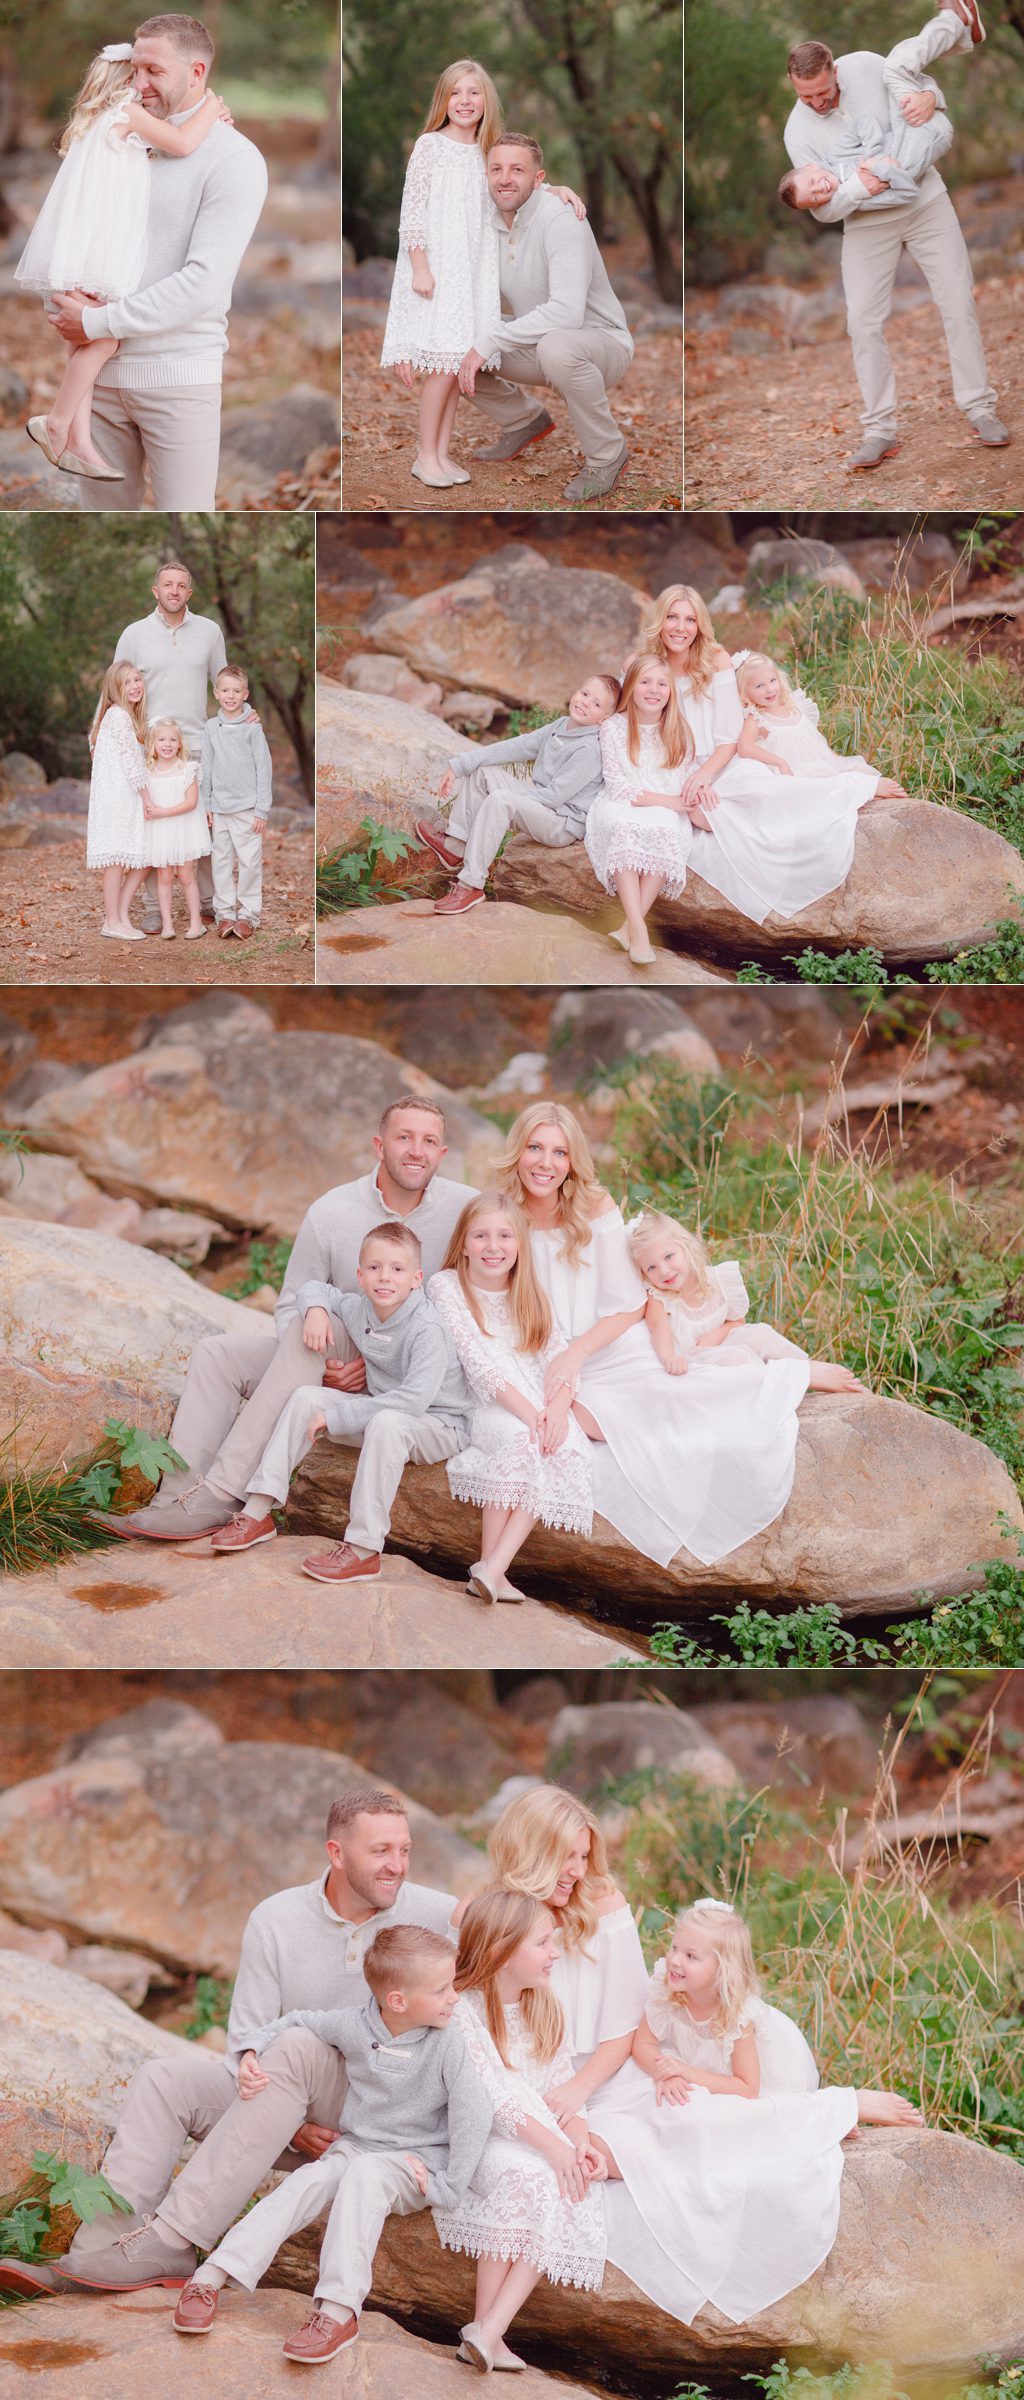 Professional family portrait photography Athens GA.